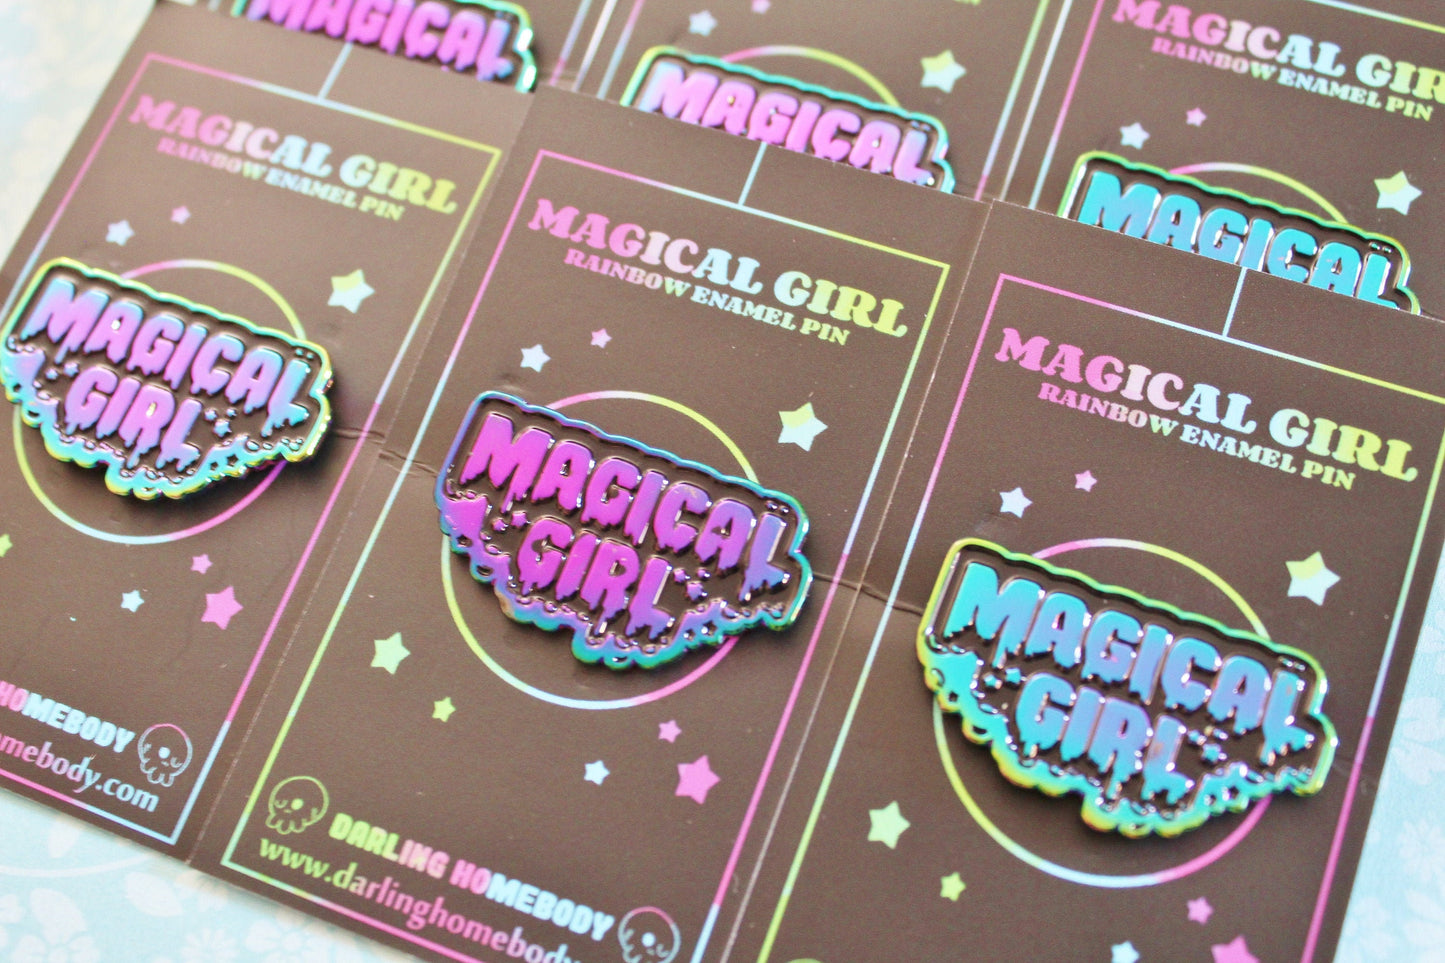 Magical Girl Rainbow Metal Enamel Pin. Lapel Pin. Kawaii Sailor Moon Gift. Cute and Creepy Aesthetic Pin. Cardcaptor Sakura. Madoka Magica.